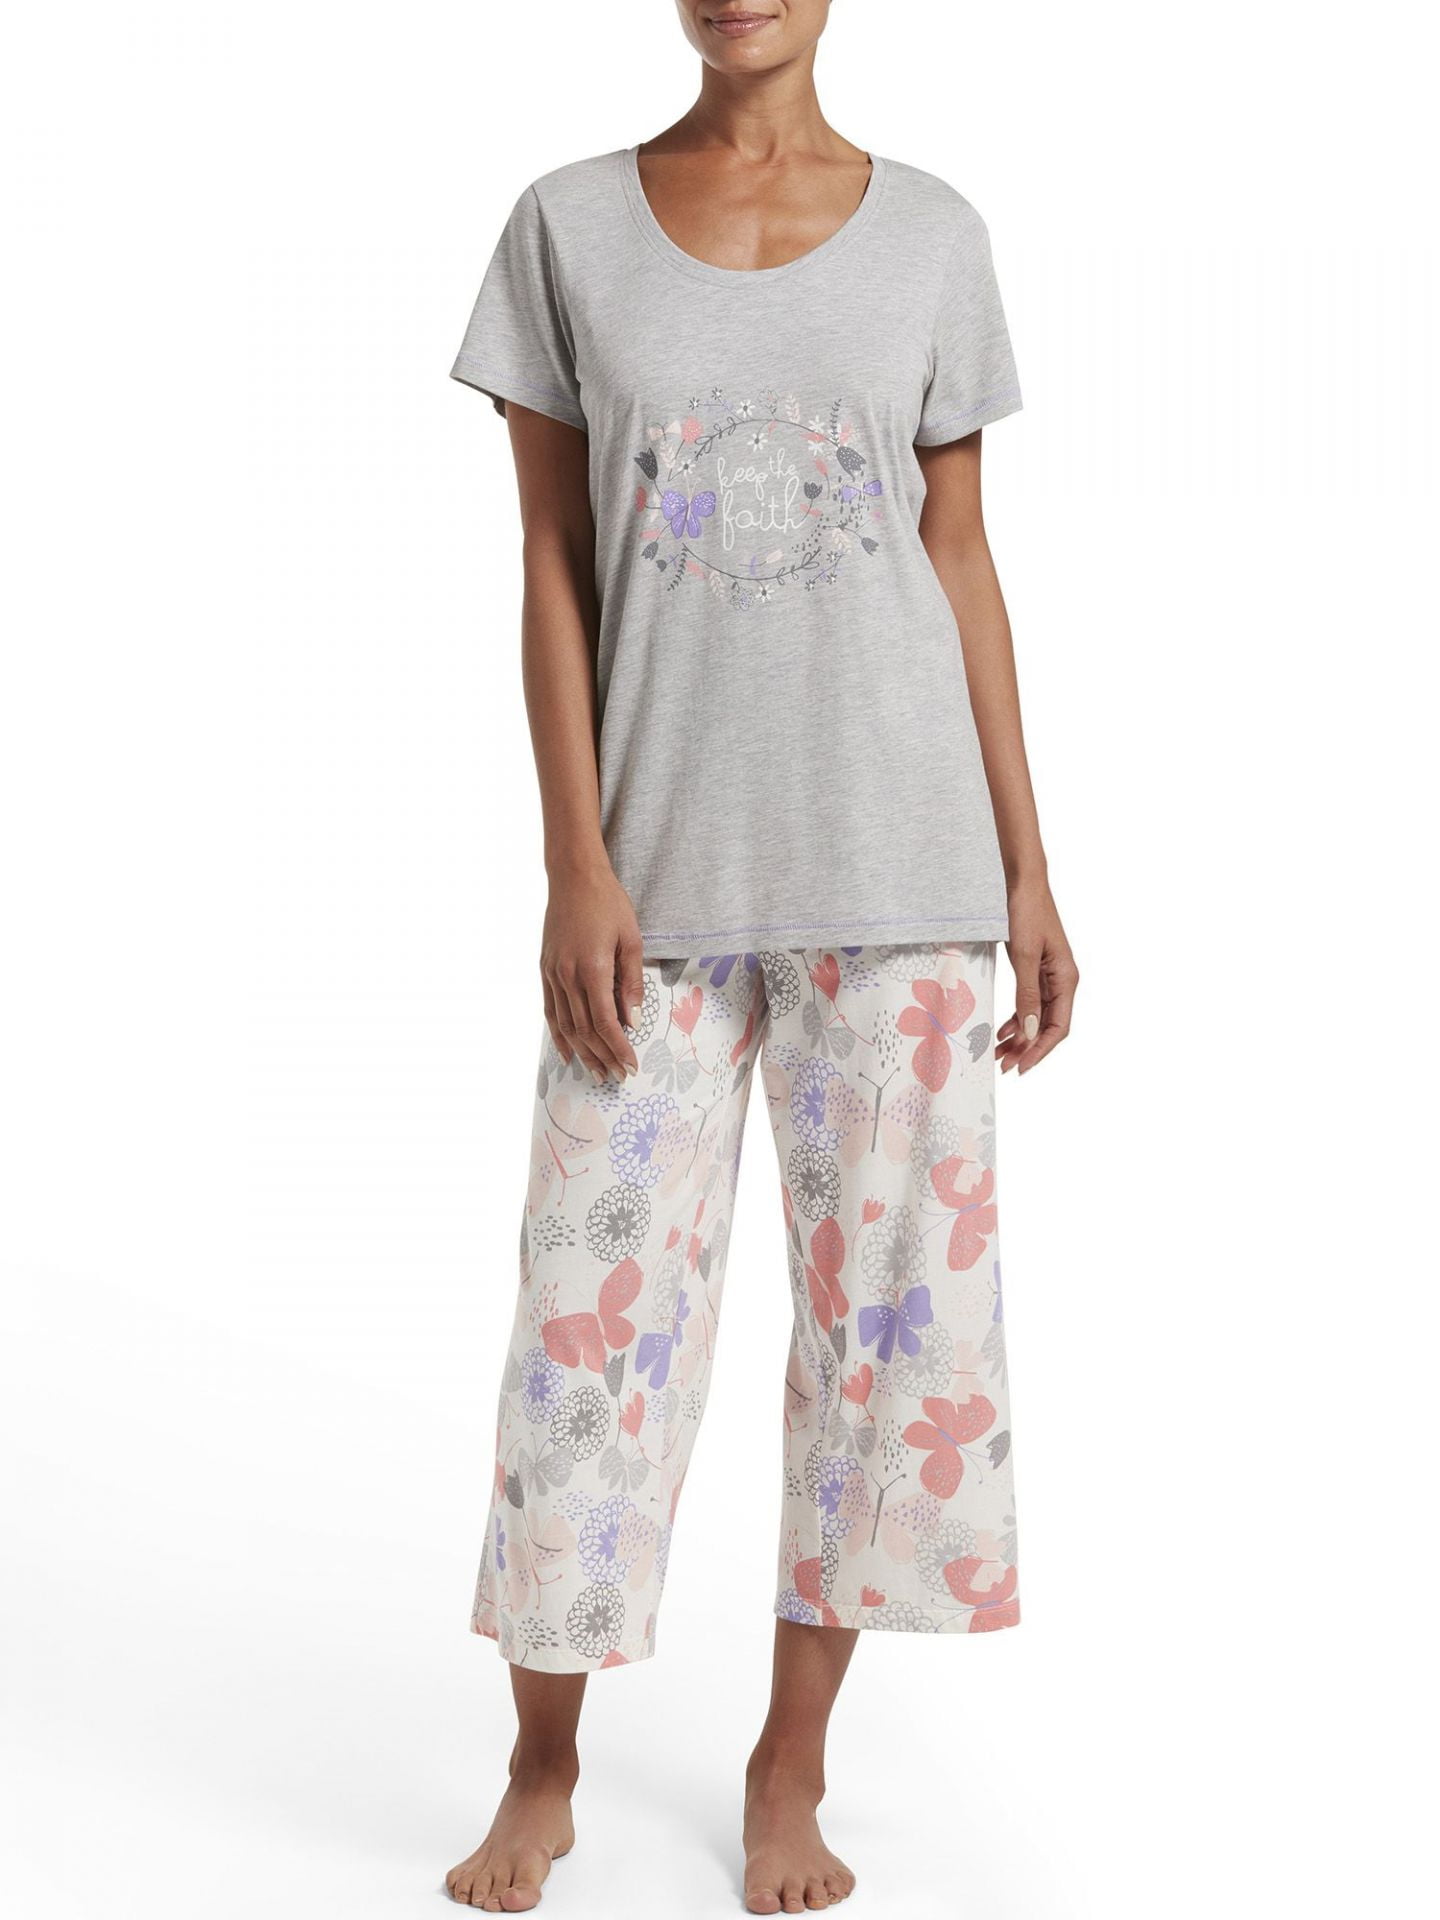 Hue - Hue Sleepwear Women's Keep The Faith Capri Pajama Set, Light ...